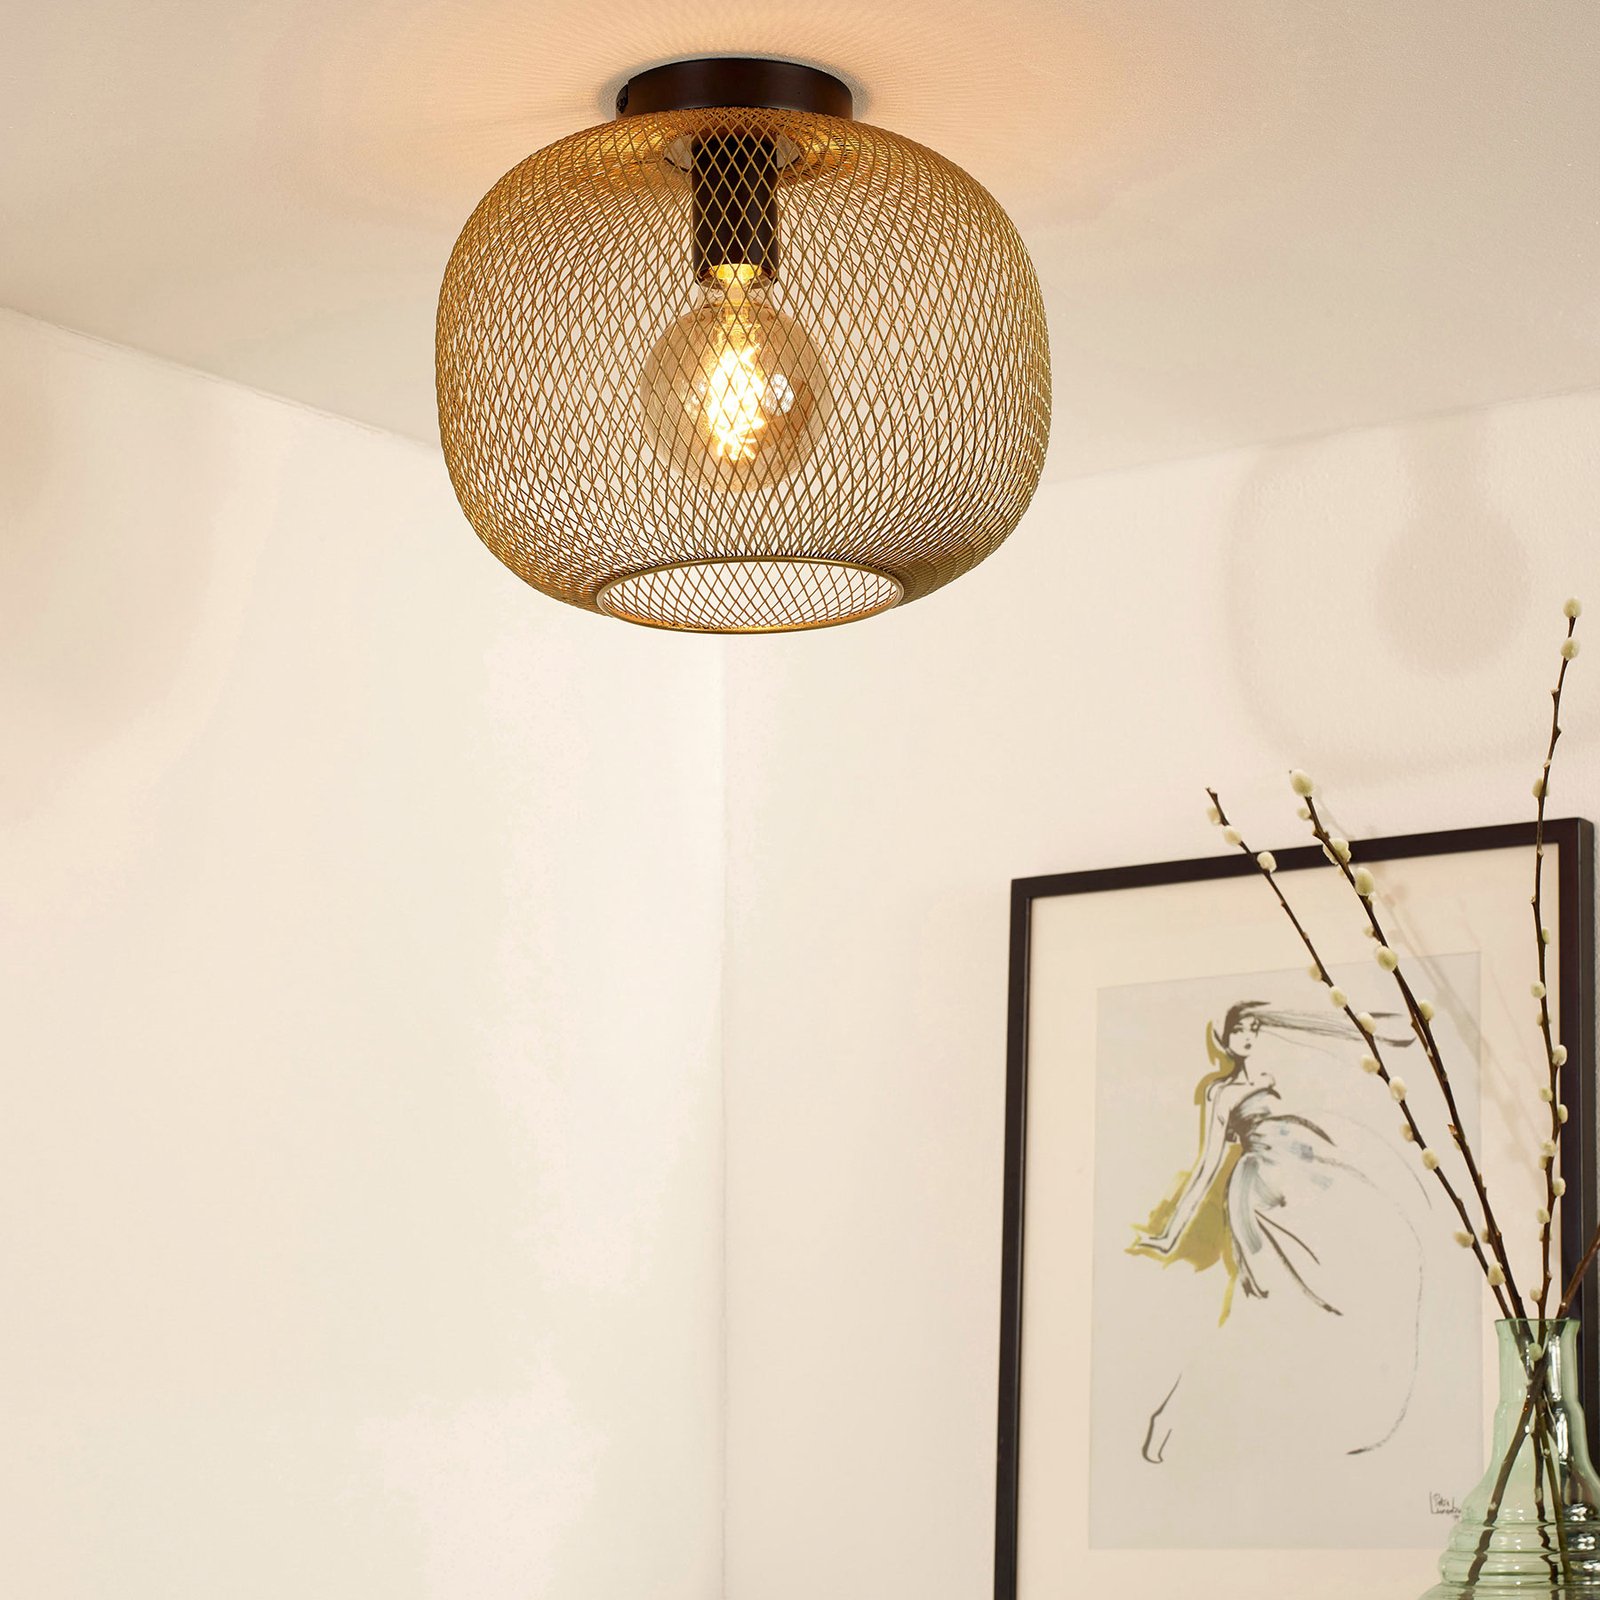 Mesh ceiling light, round, Ø 30 cm, gold